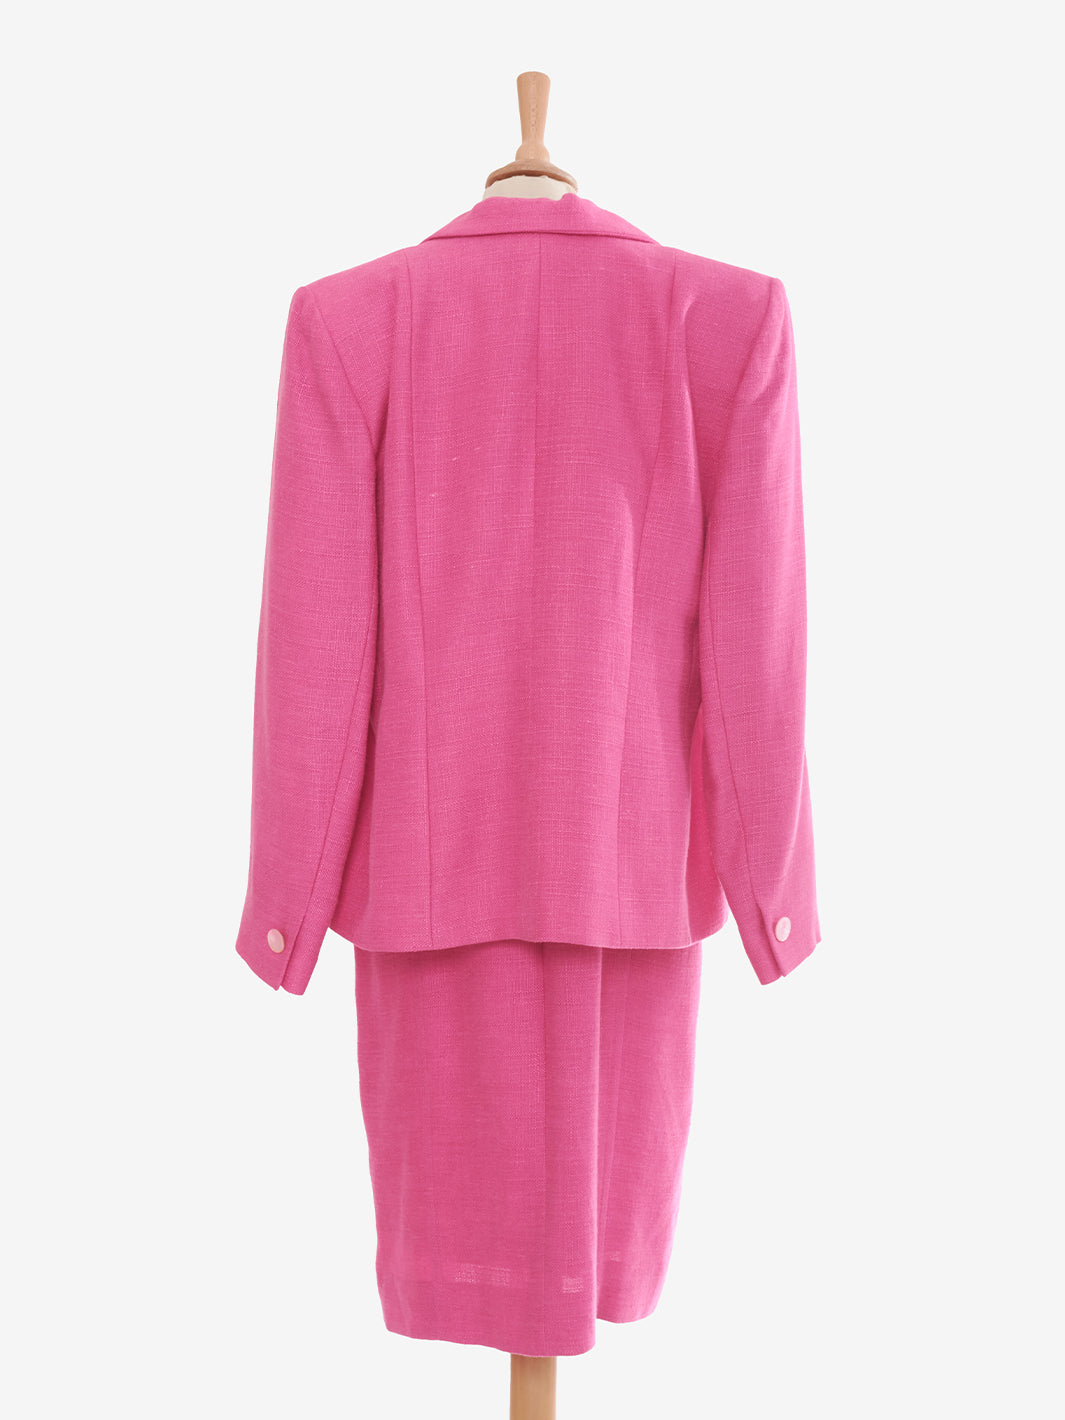 Yves Saint Laurent Fuchsia Suit